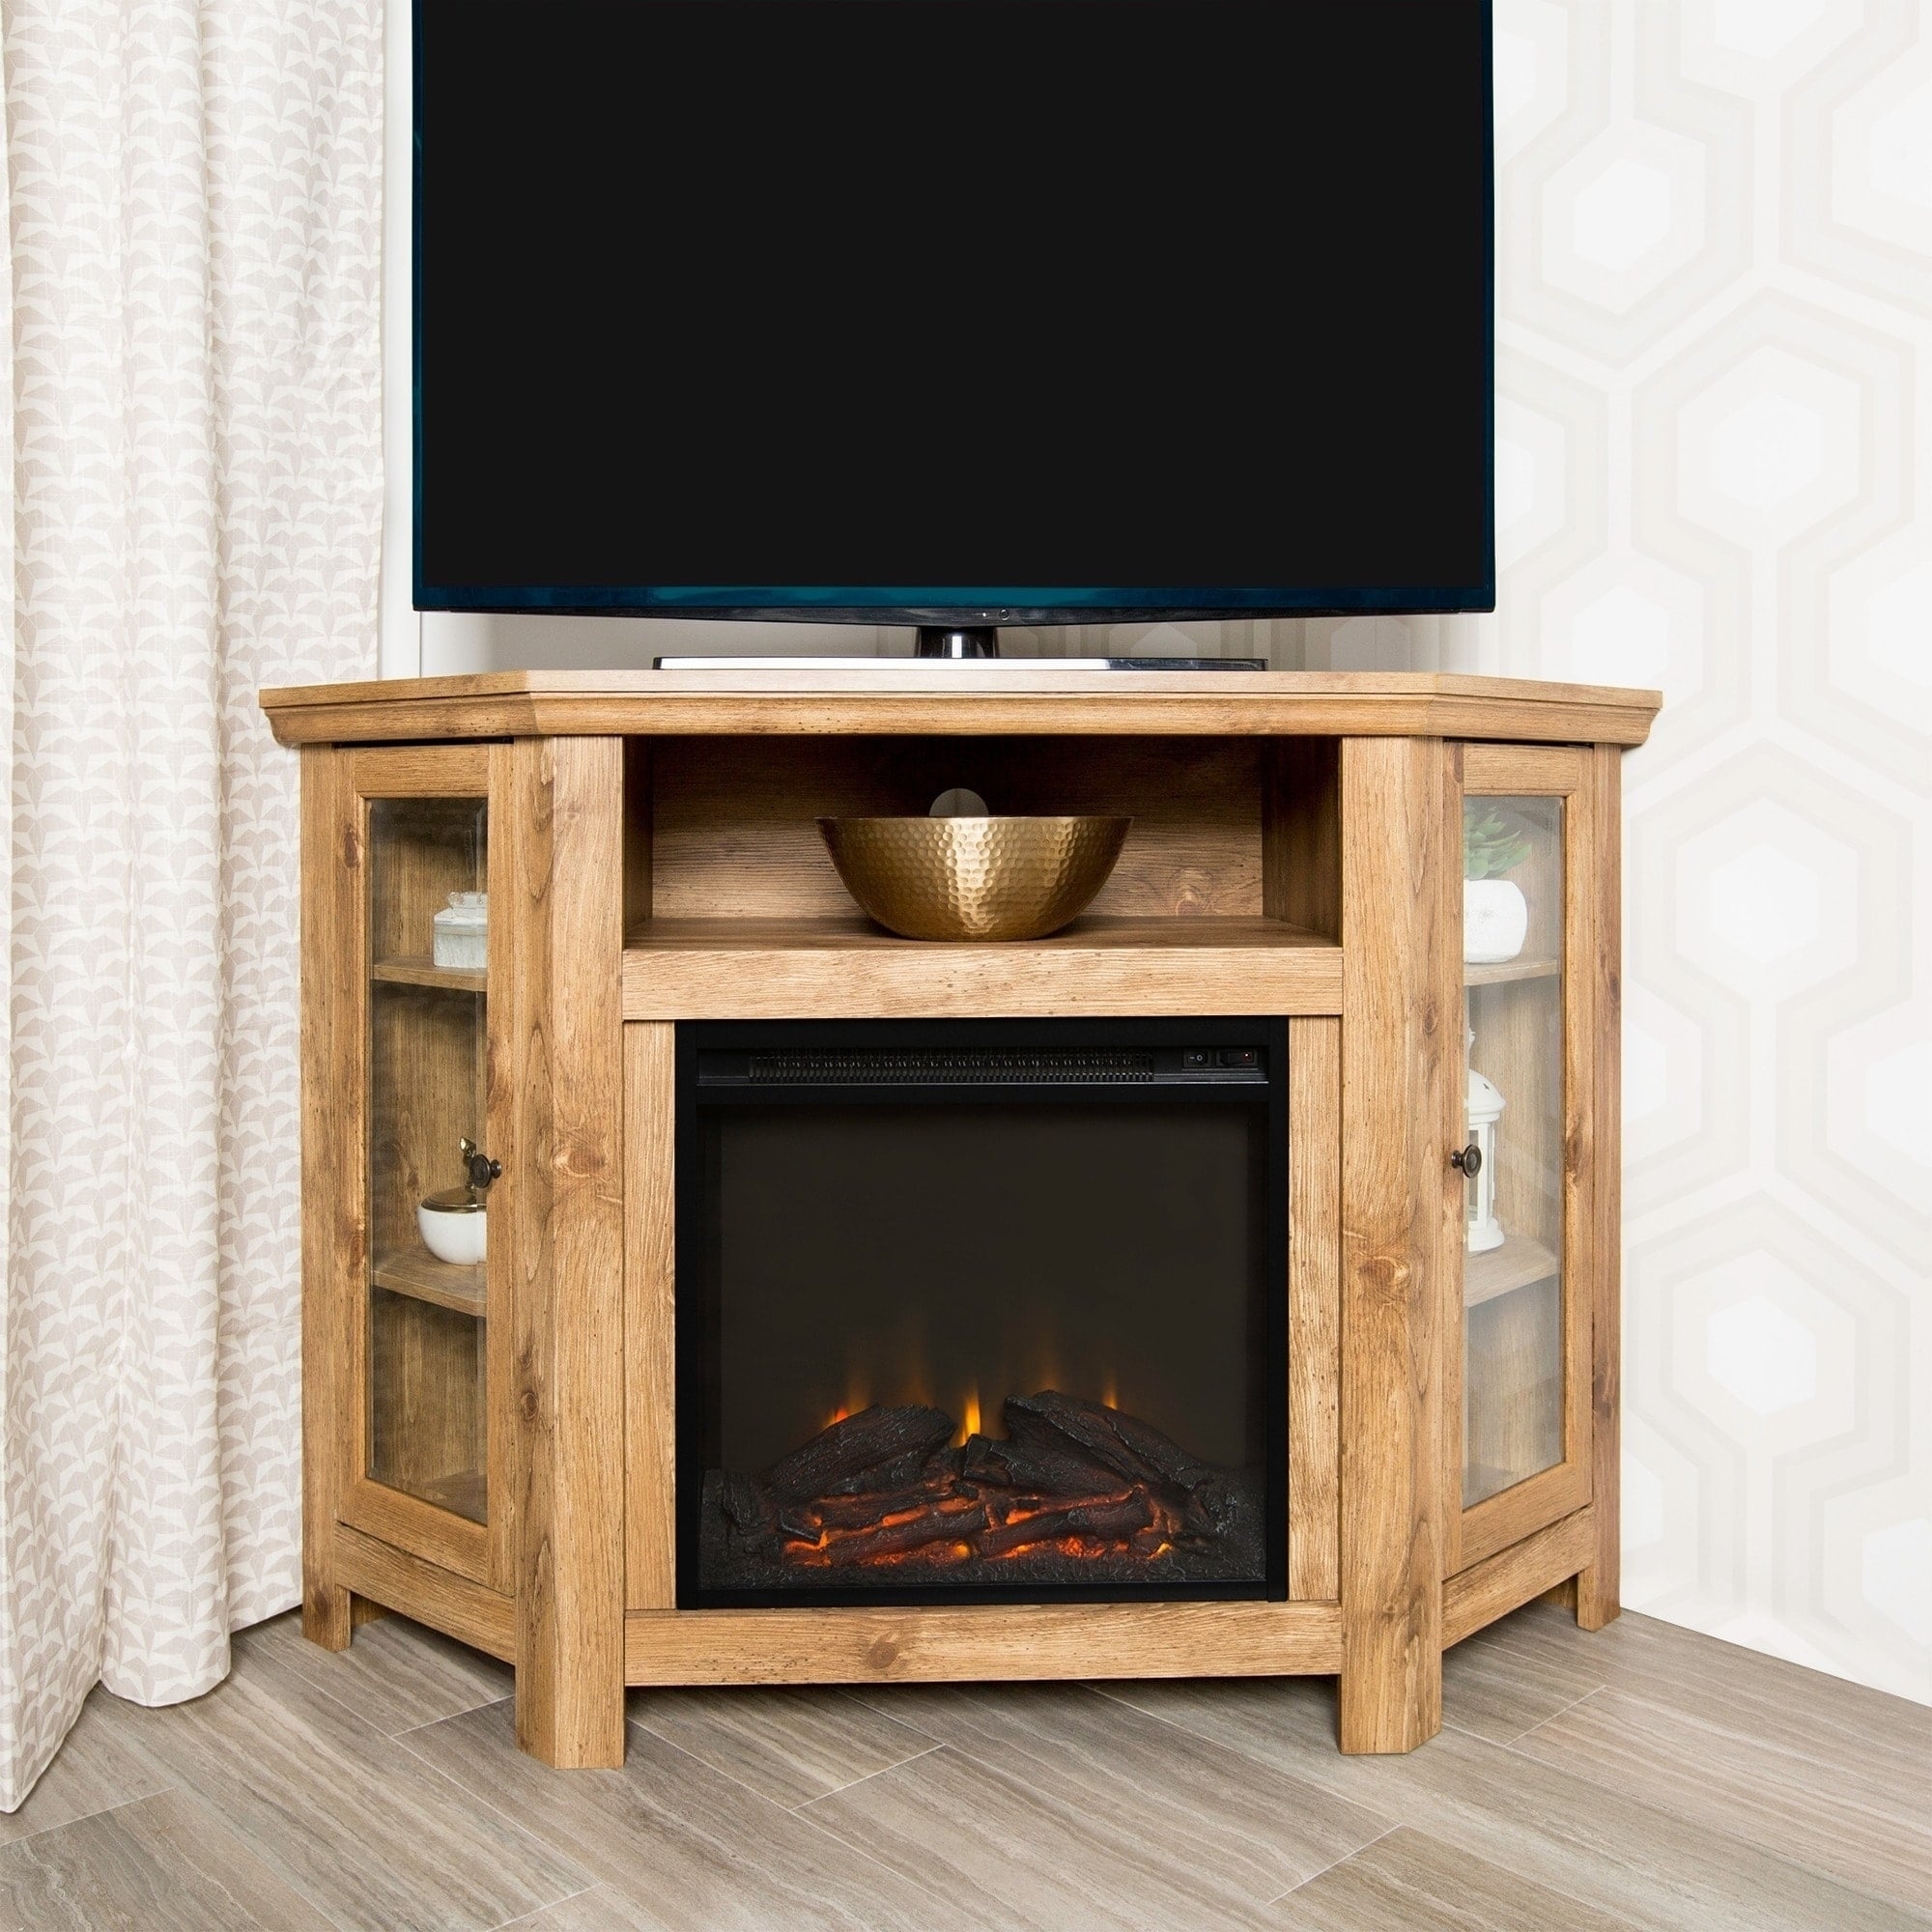 We furniture barnwood 48 inch corner fireplace tv stand